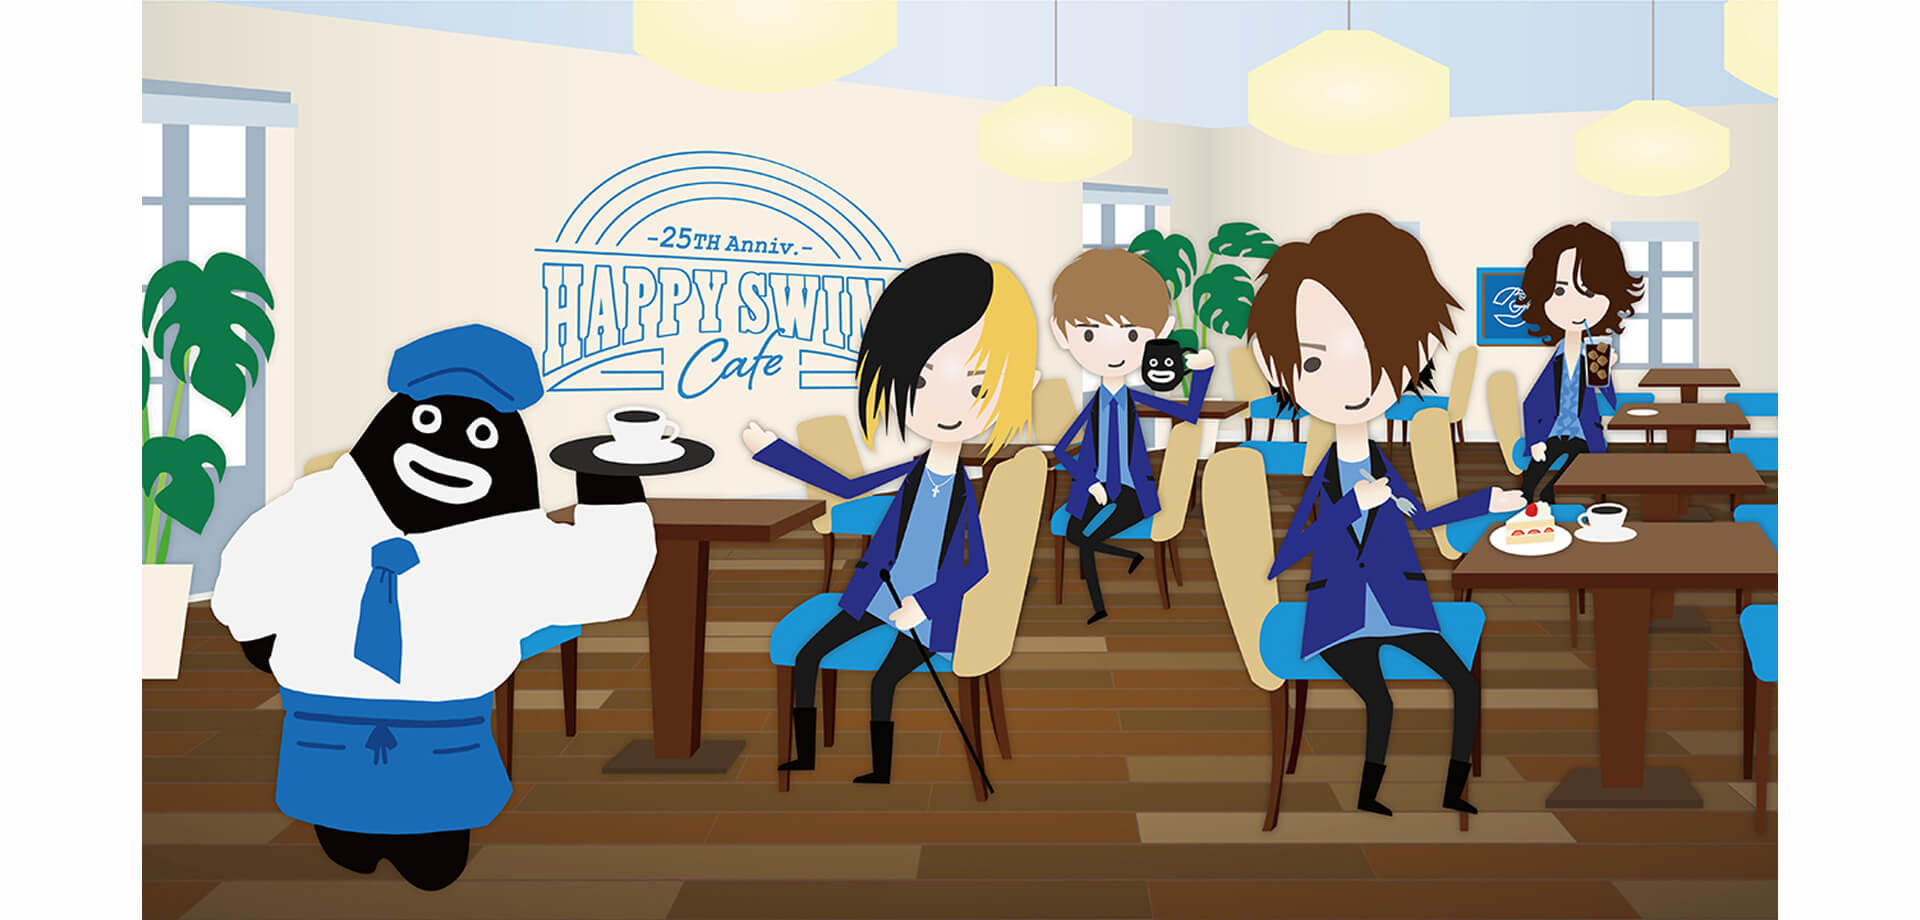 25th Anniv. HAPPY SWING Cafe